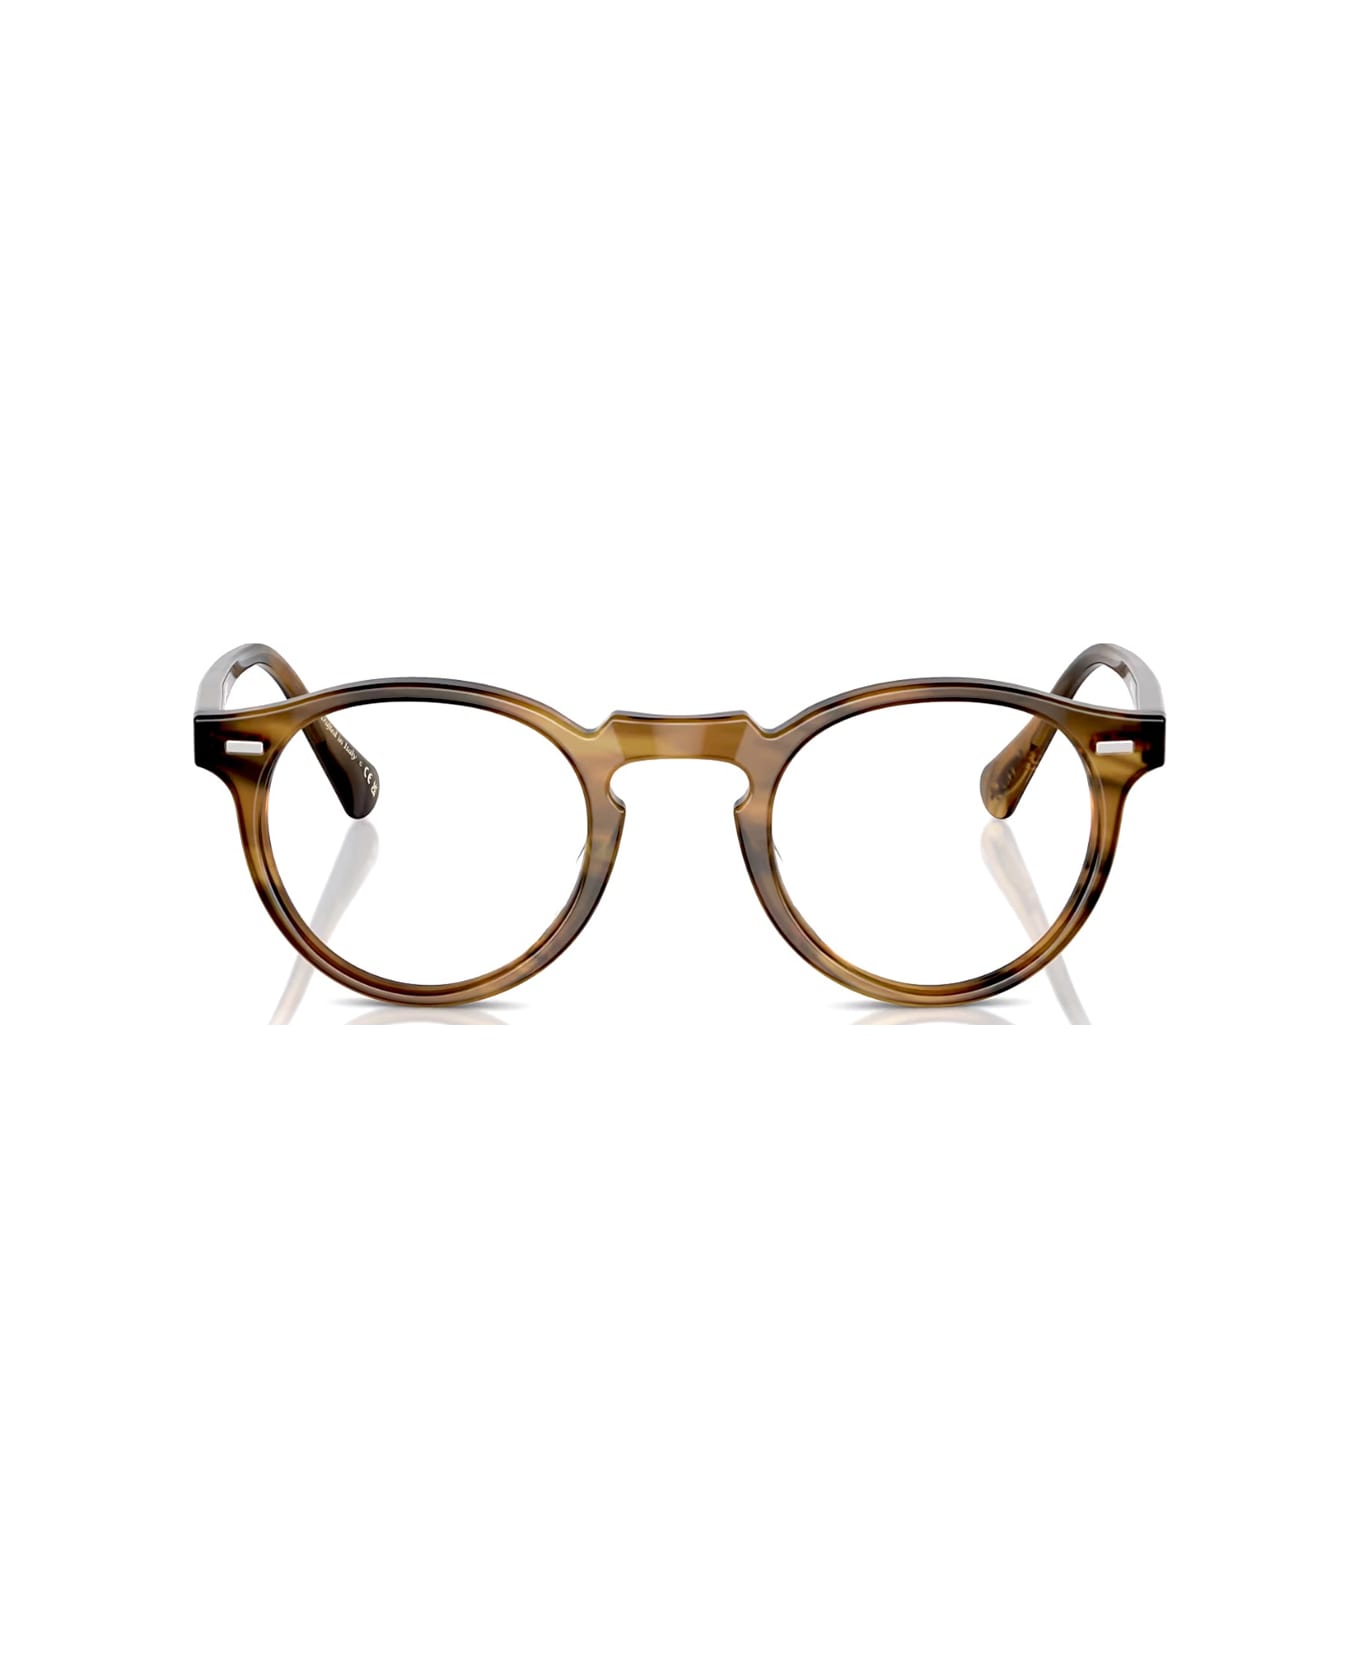 Oliver Peoples Ov5186 - Gregory Peck 1011 Glasses - Marrone アイウェア